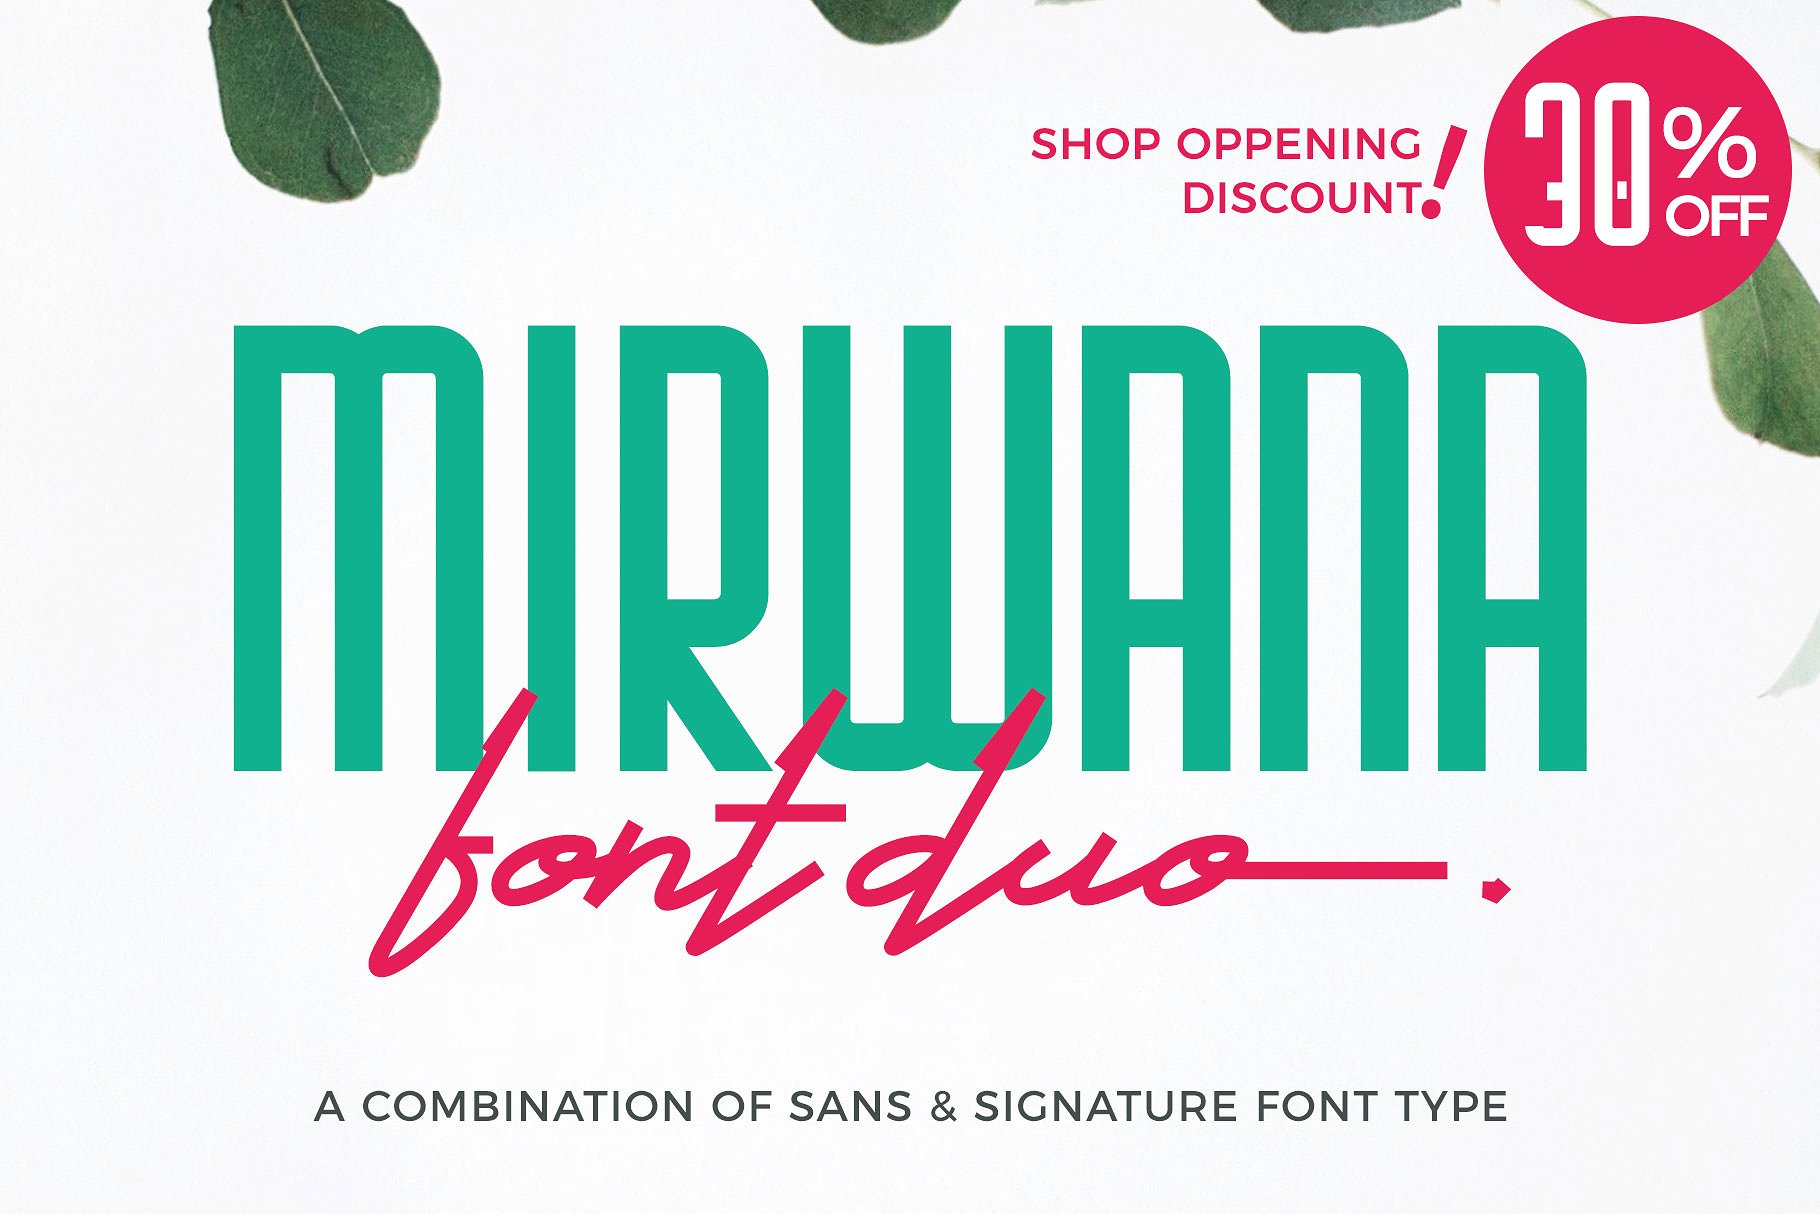 Mirwana PERSONAL USE font